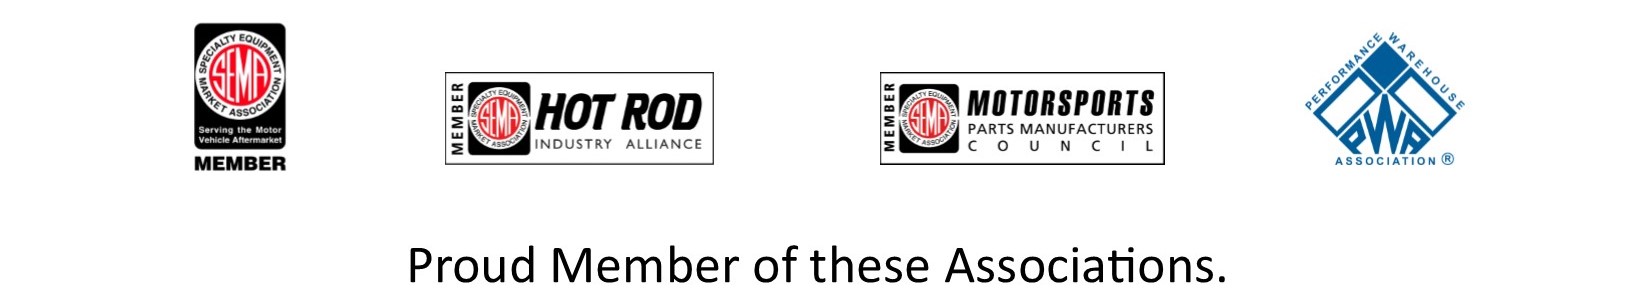 Association Membership 5